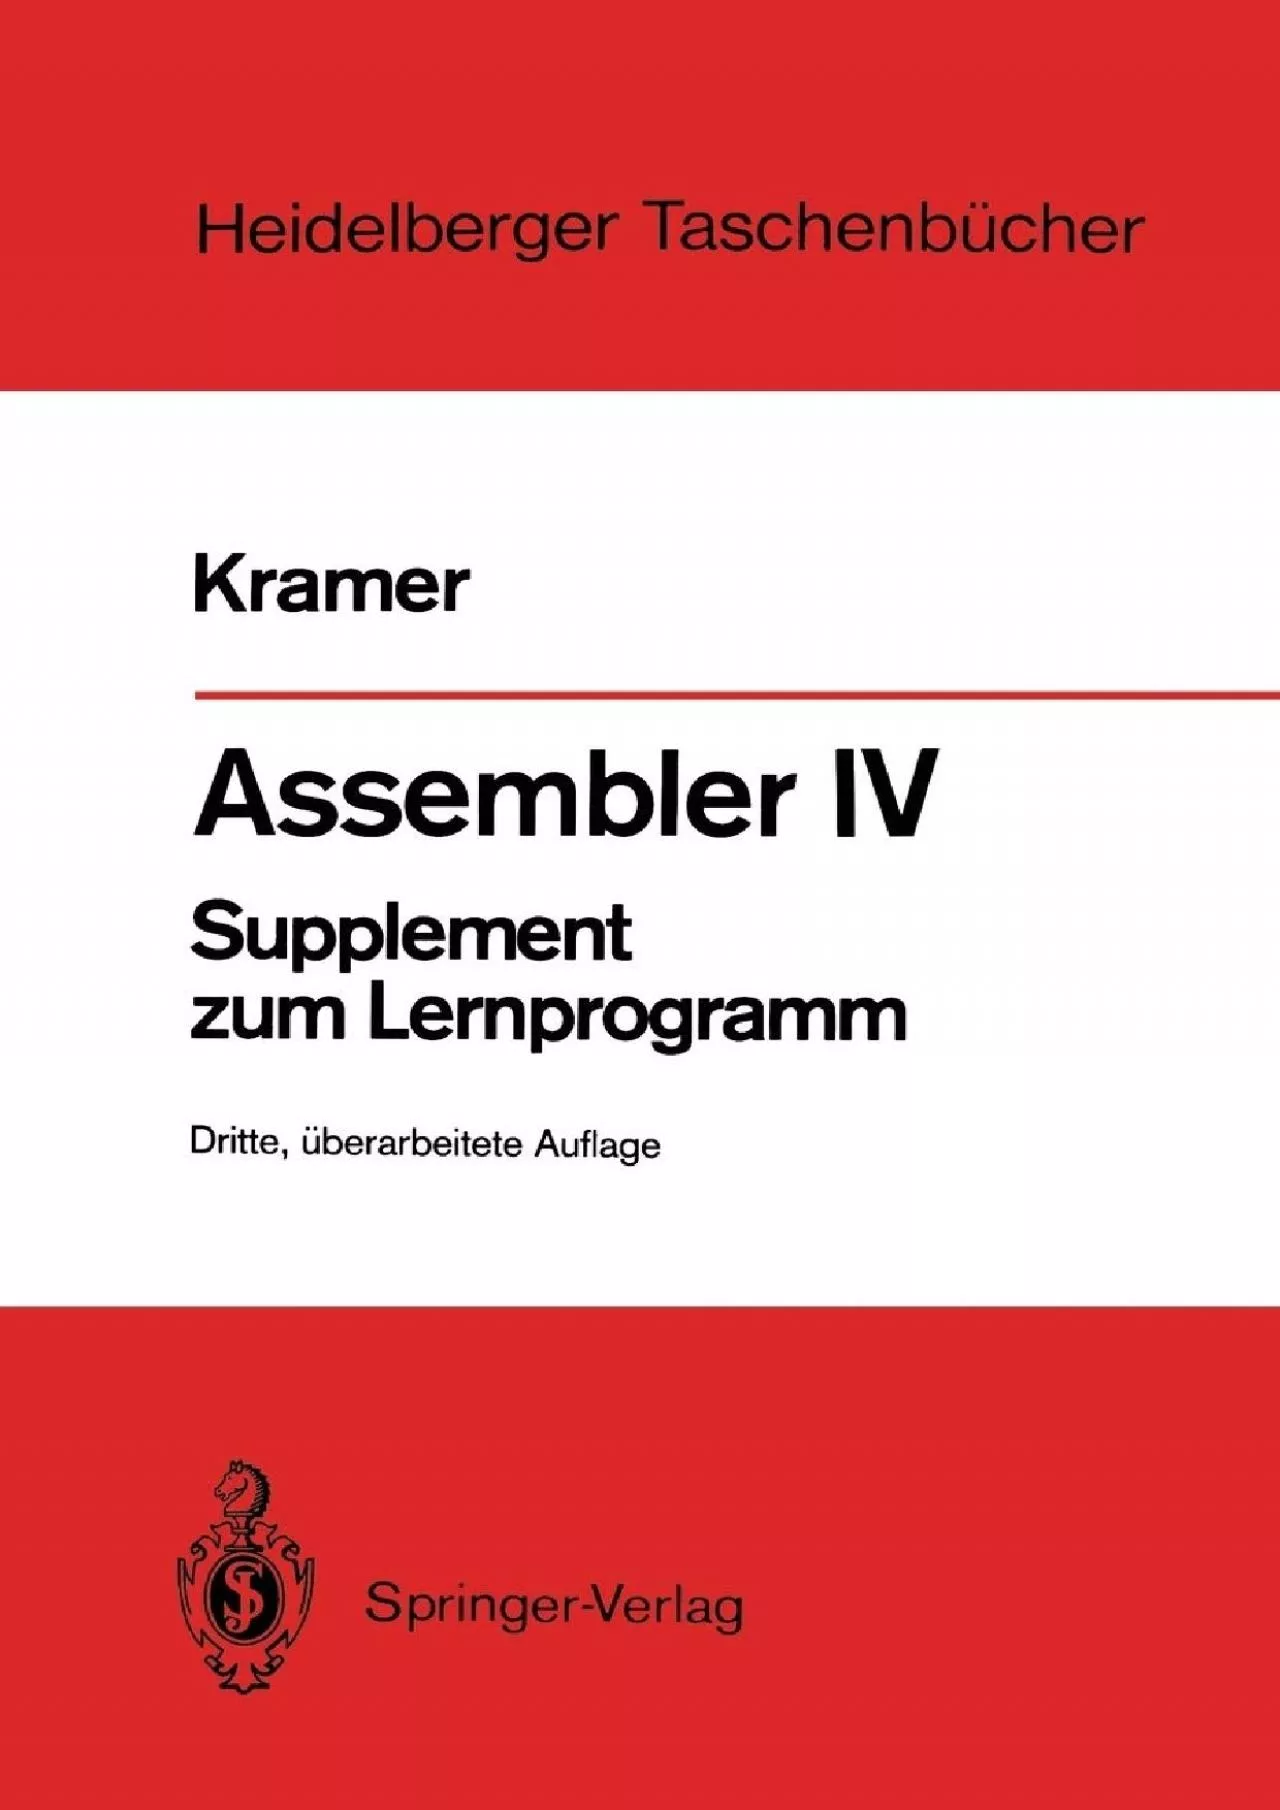 [READING BOOK]-Assembler IV: Supplement zum Lernprogramm (Heidelberger Taschenbücher,